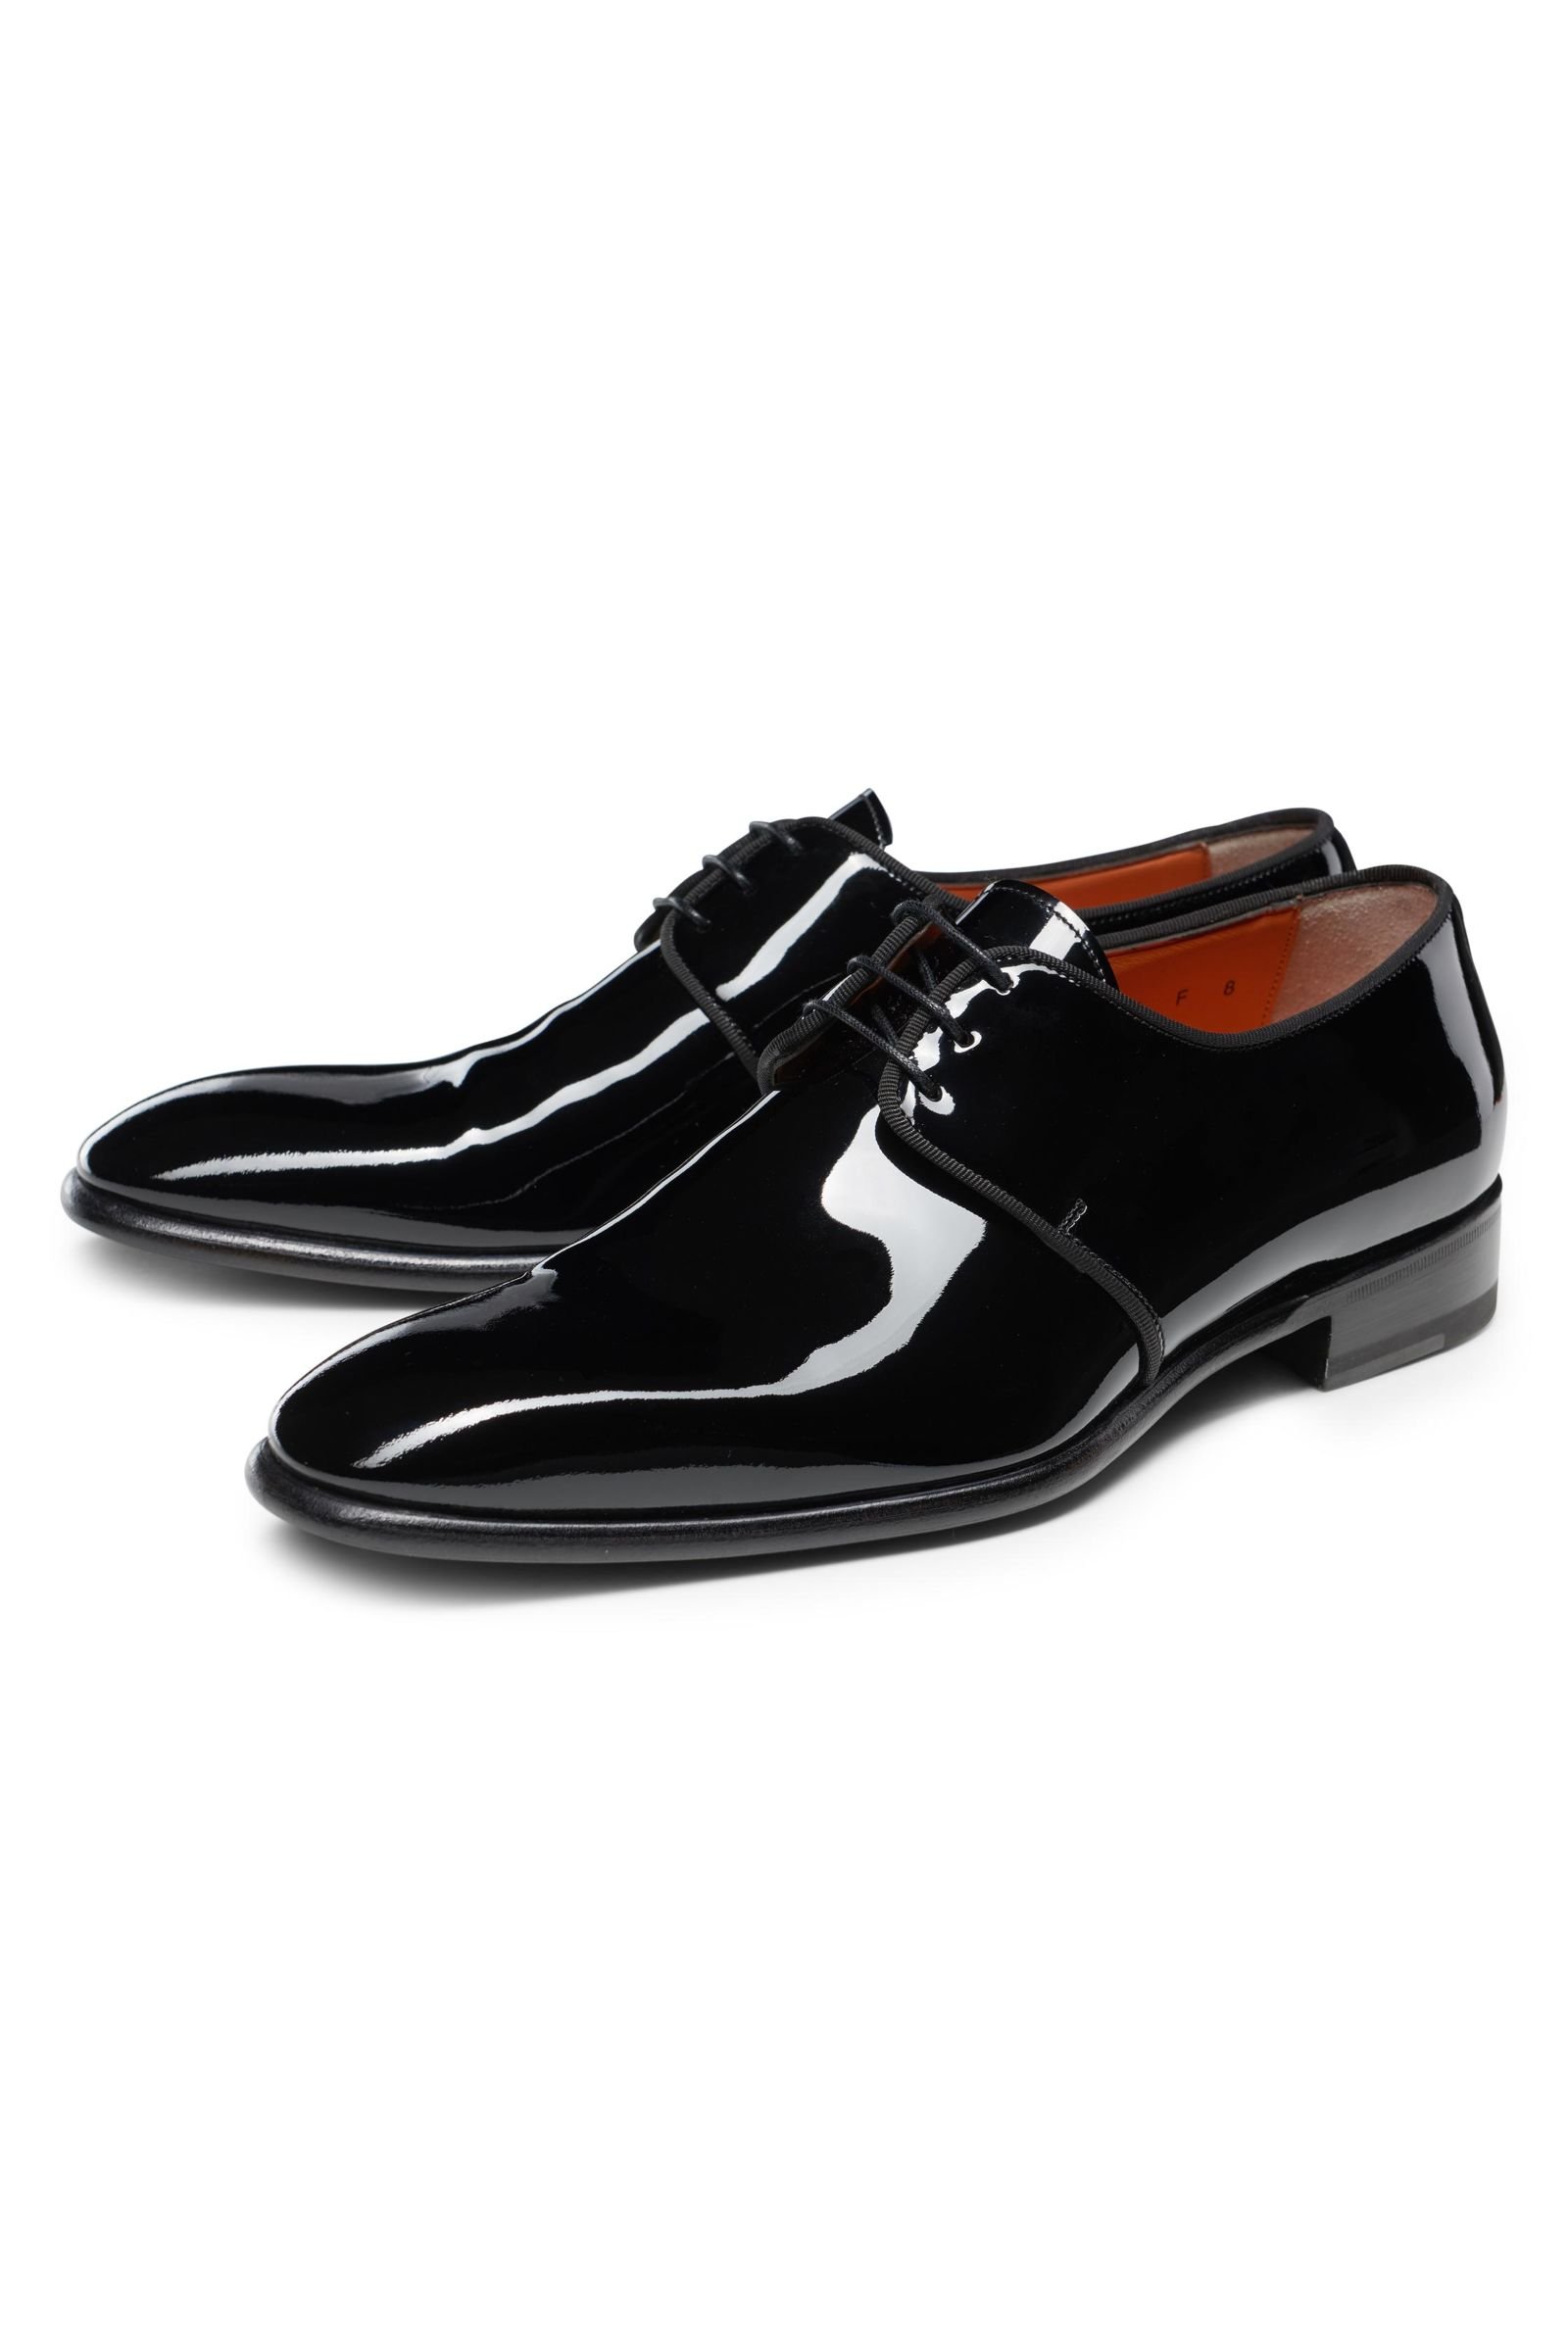 SANTONI patent leather Derby shoes black | BRAUN Hamburg